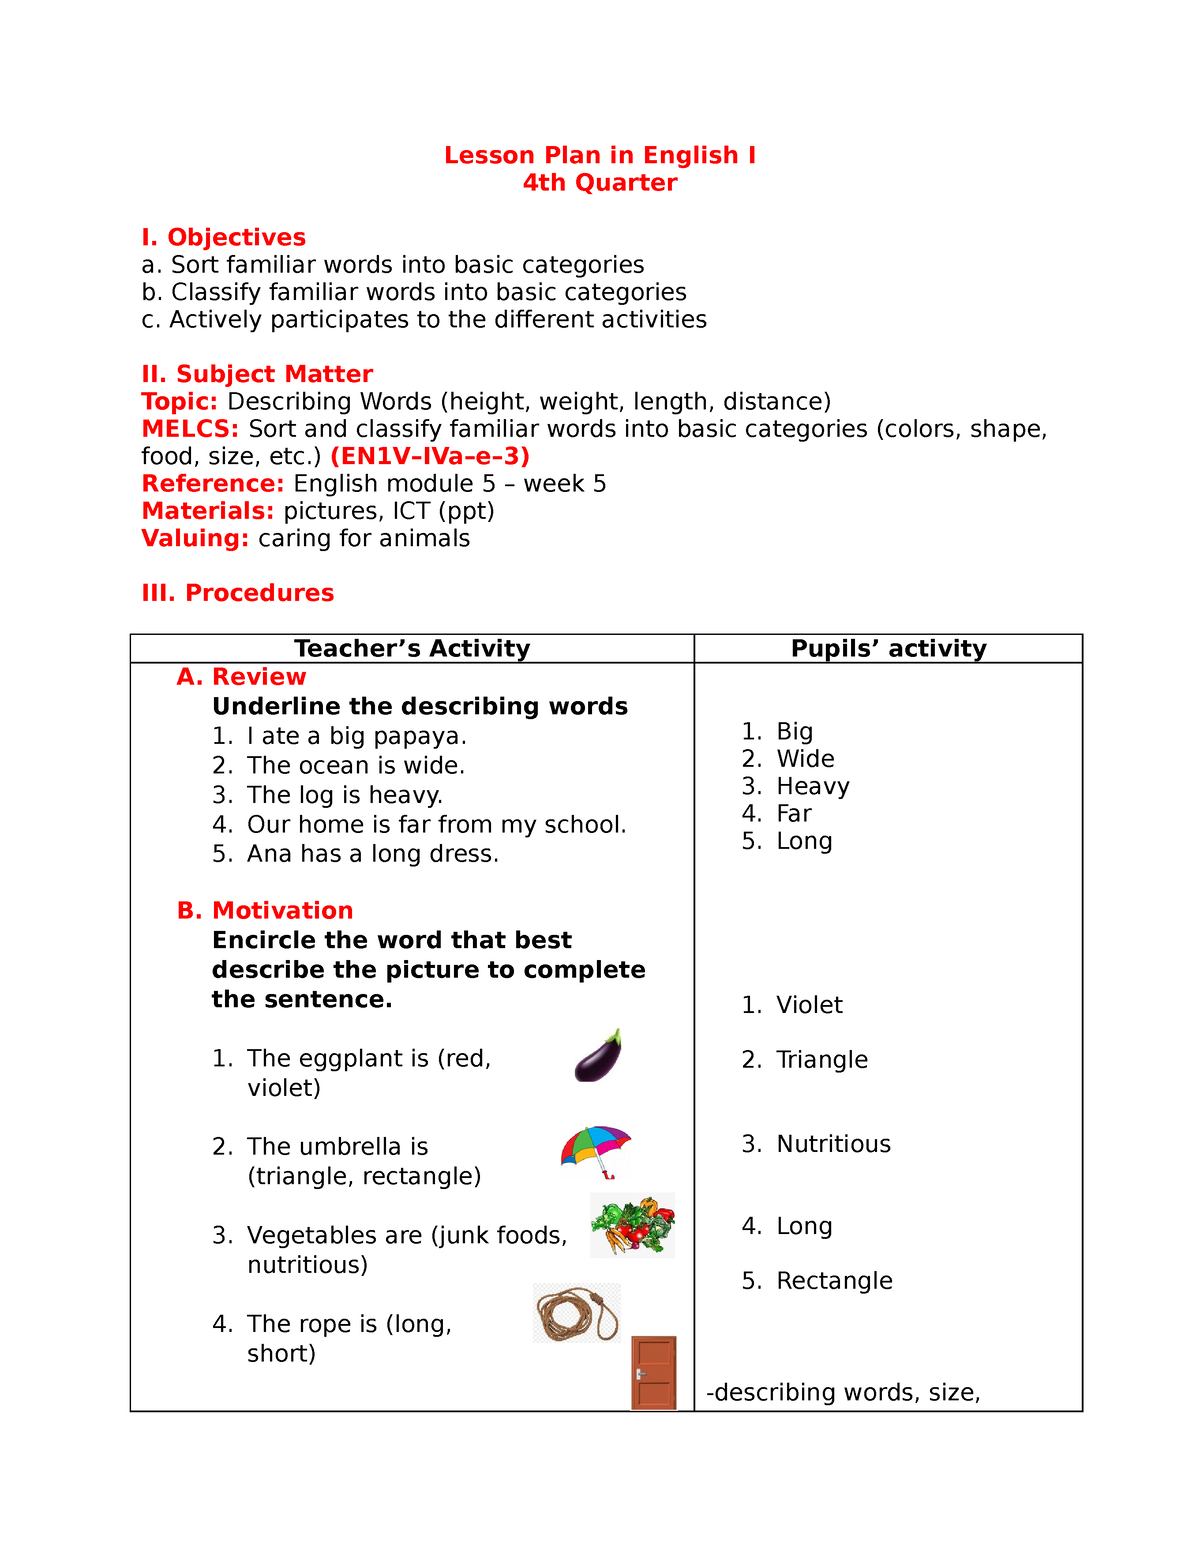 Basic Categories Of Words Worksheet